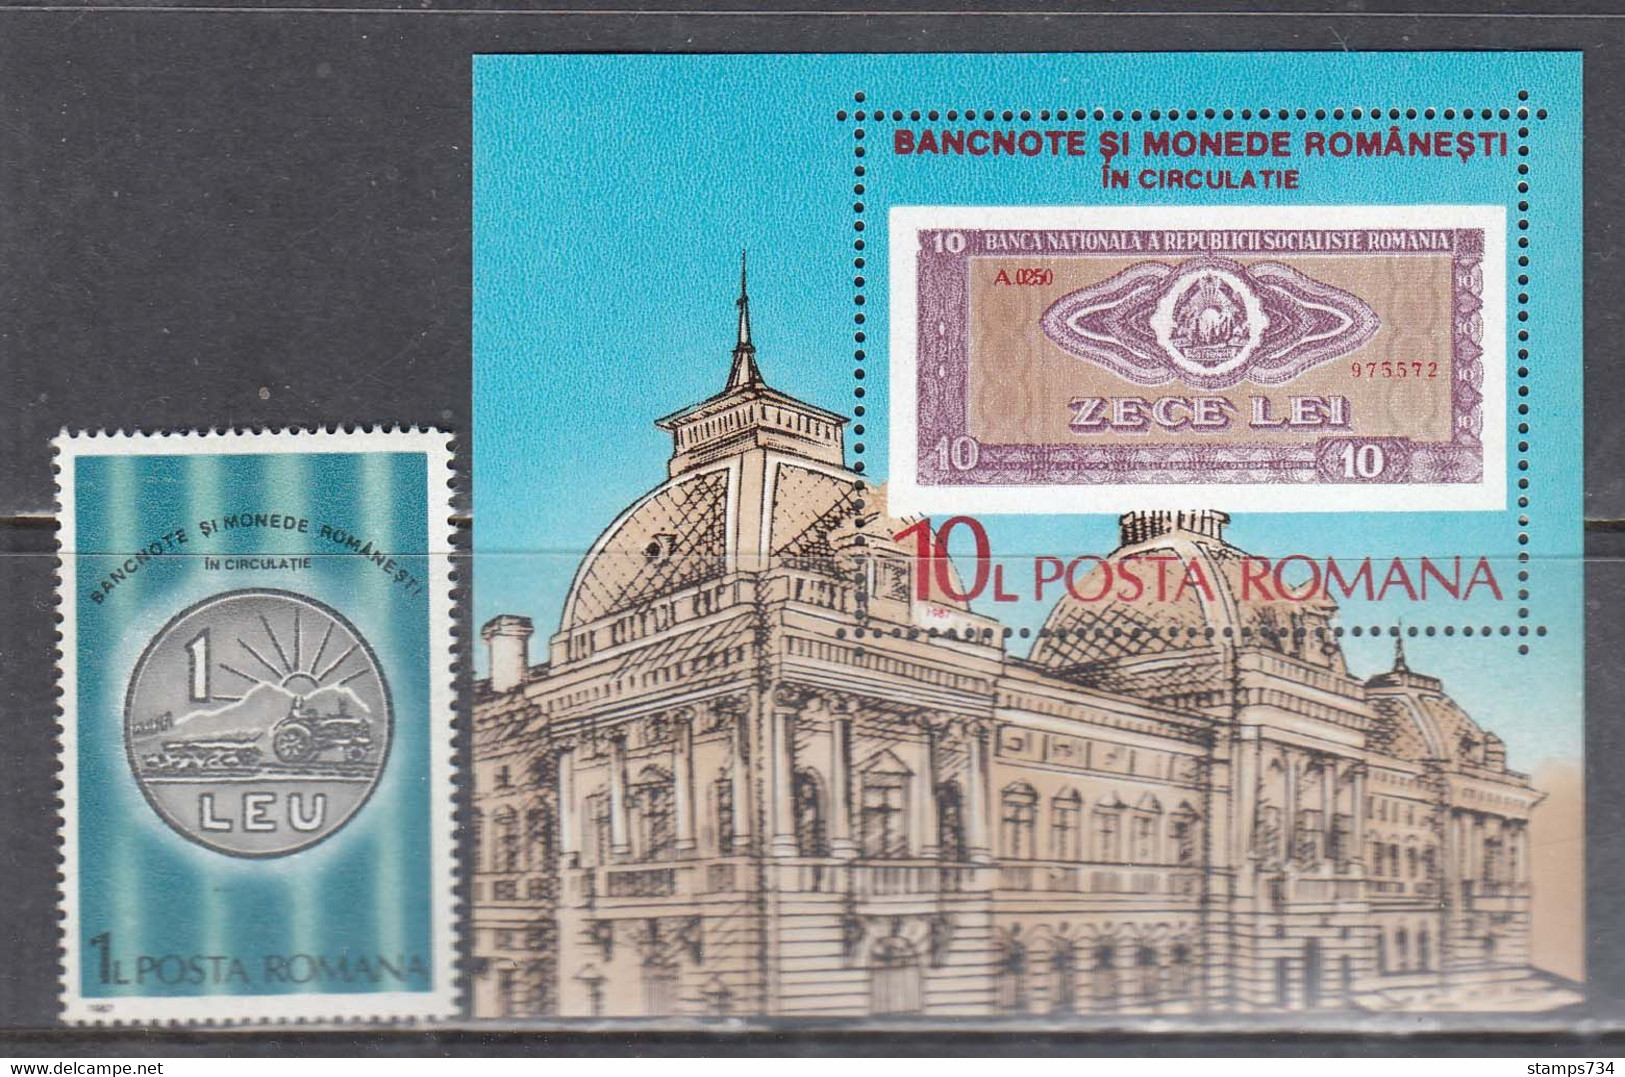 Romania 1987 - Circulating Romanian Banknotes And Coins, Mi-Nr. 4339+Bl. 233, MNH** - Nuevos